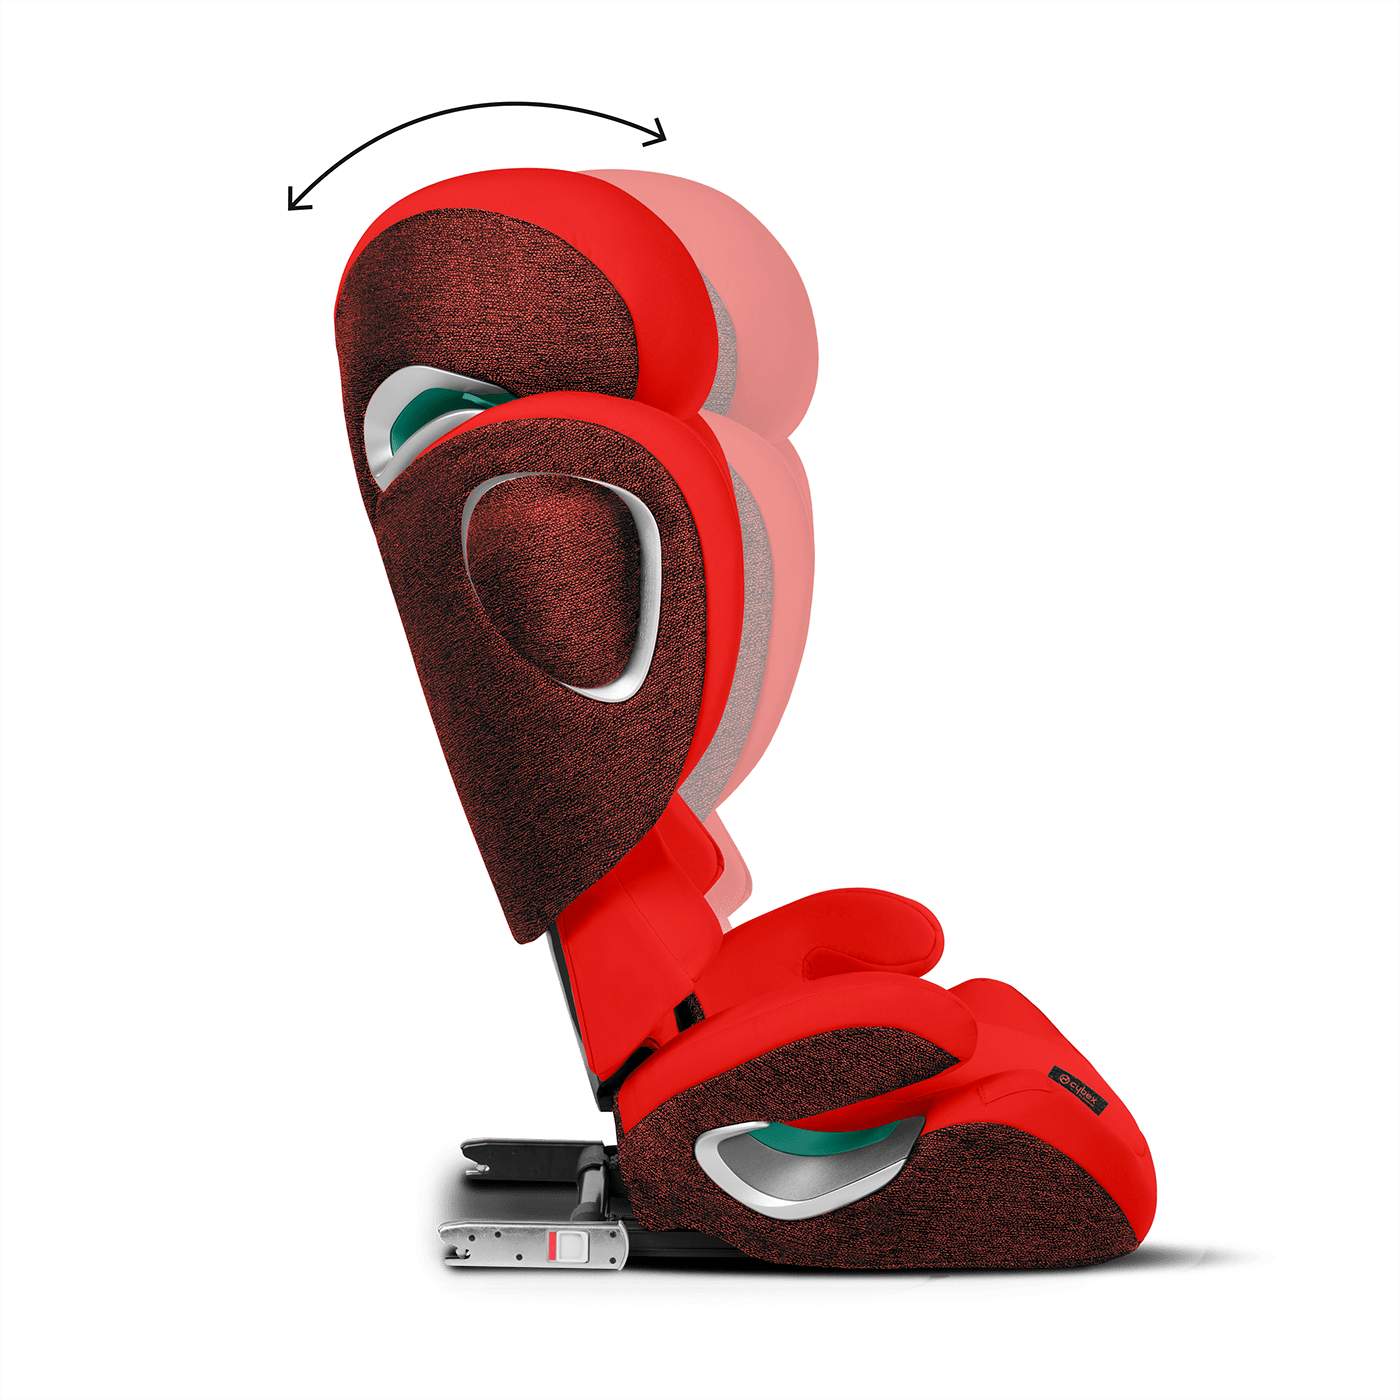 cybex design kryštof veis peter mašek red reddot surfacing